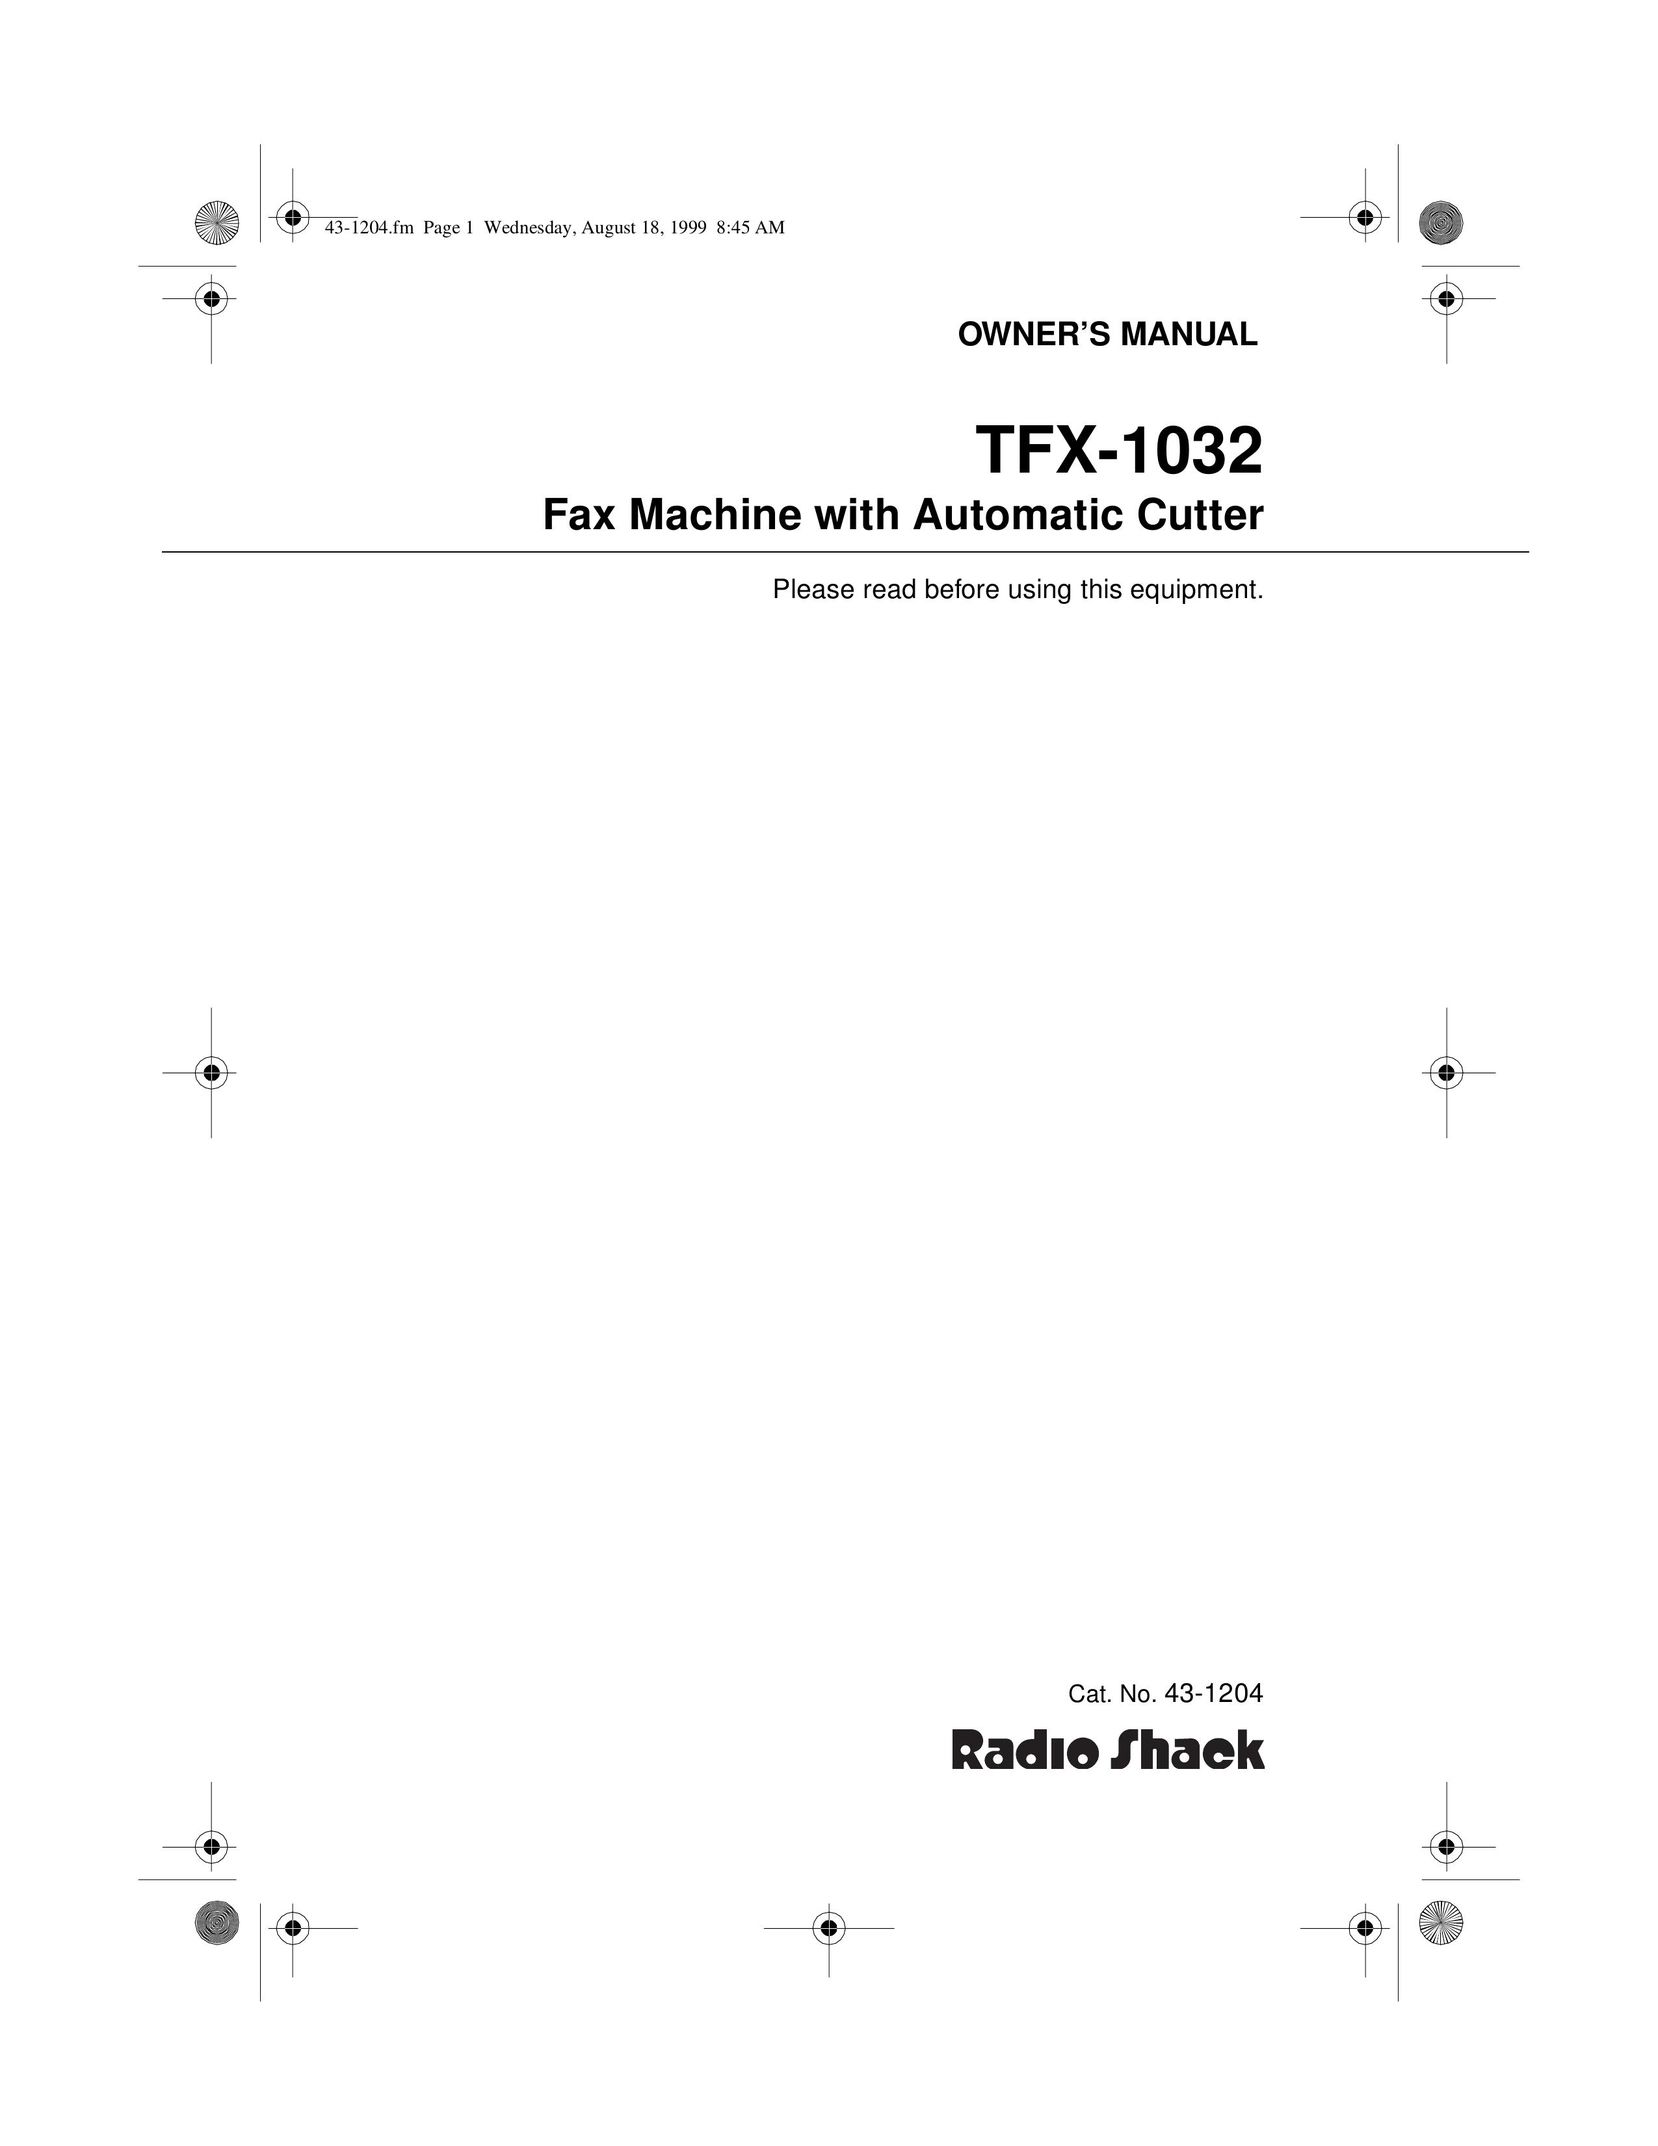 Radio Shack 43-1204 Fax Machine User Manual